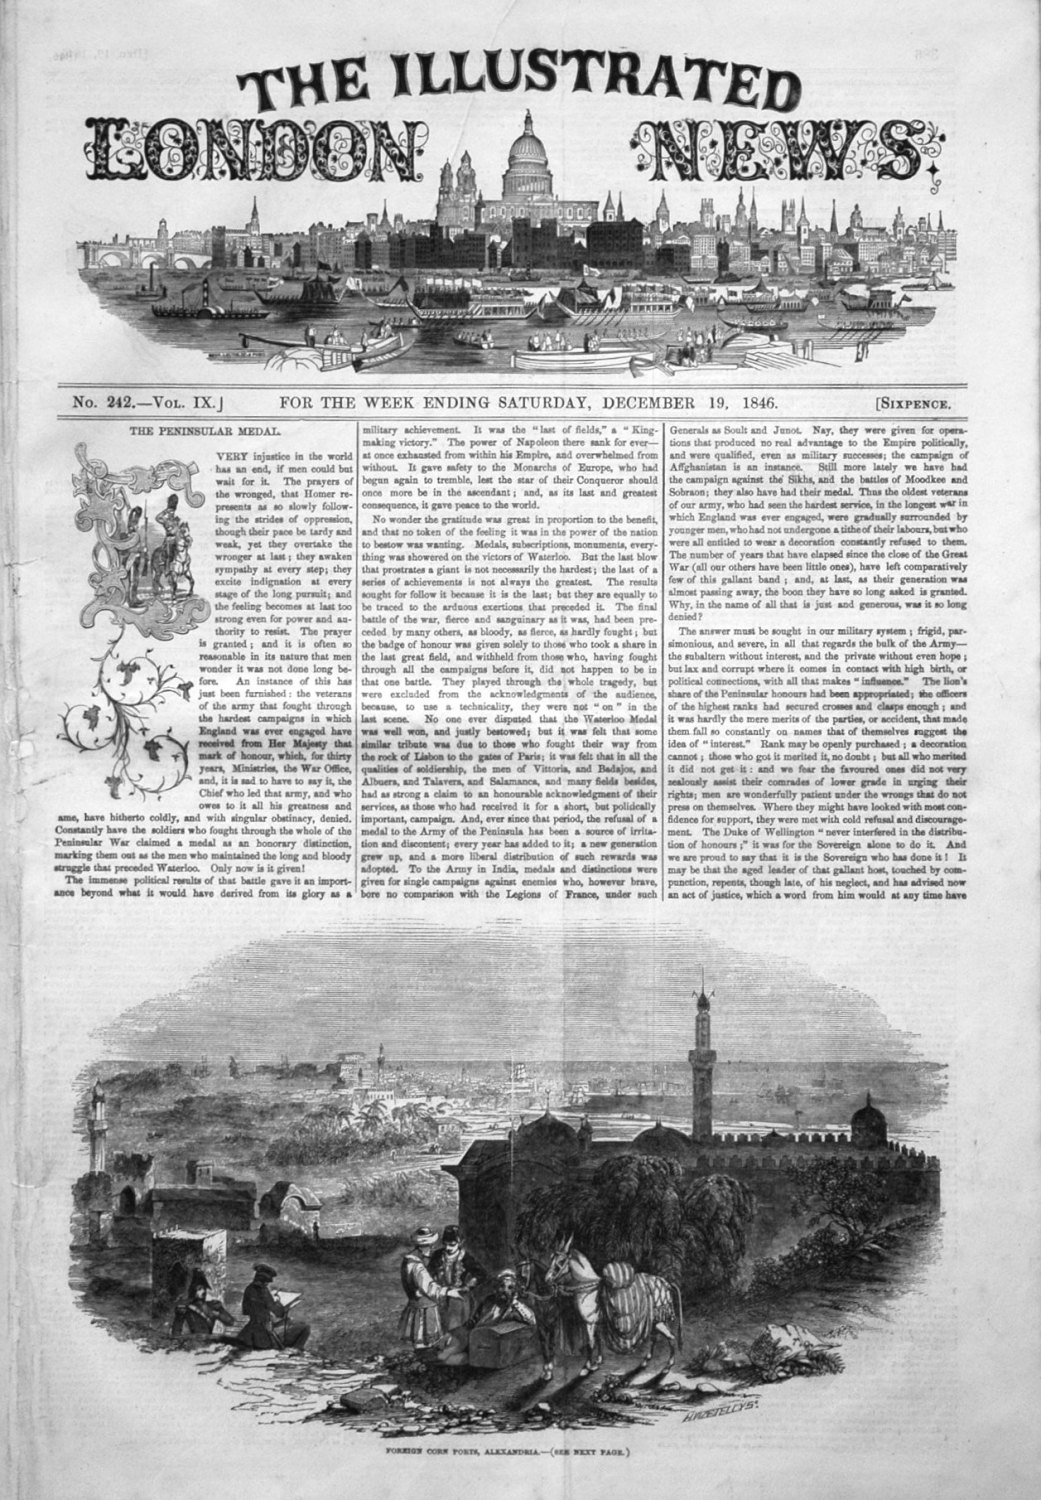 Illustrated London News, December 19th 1846.